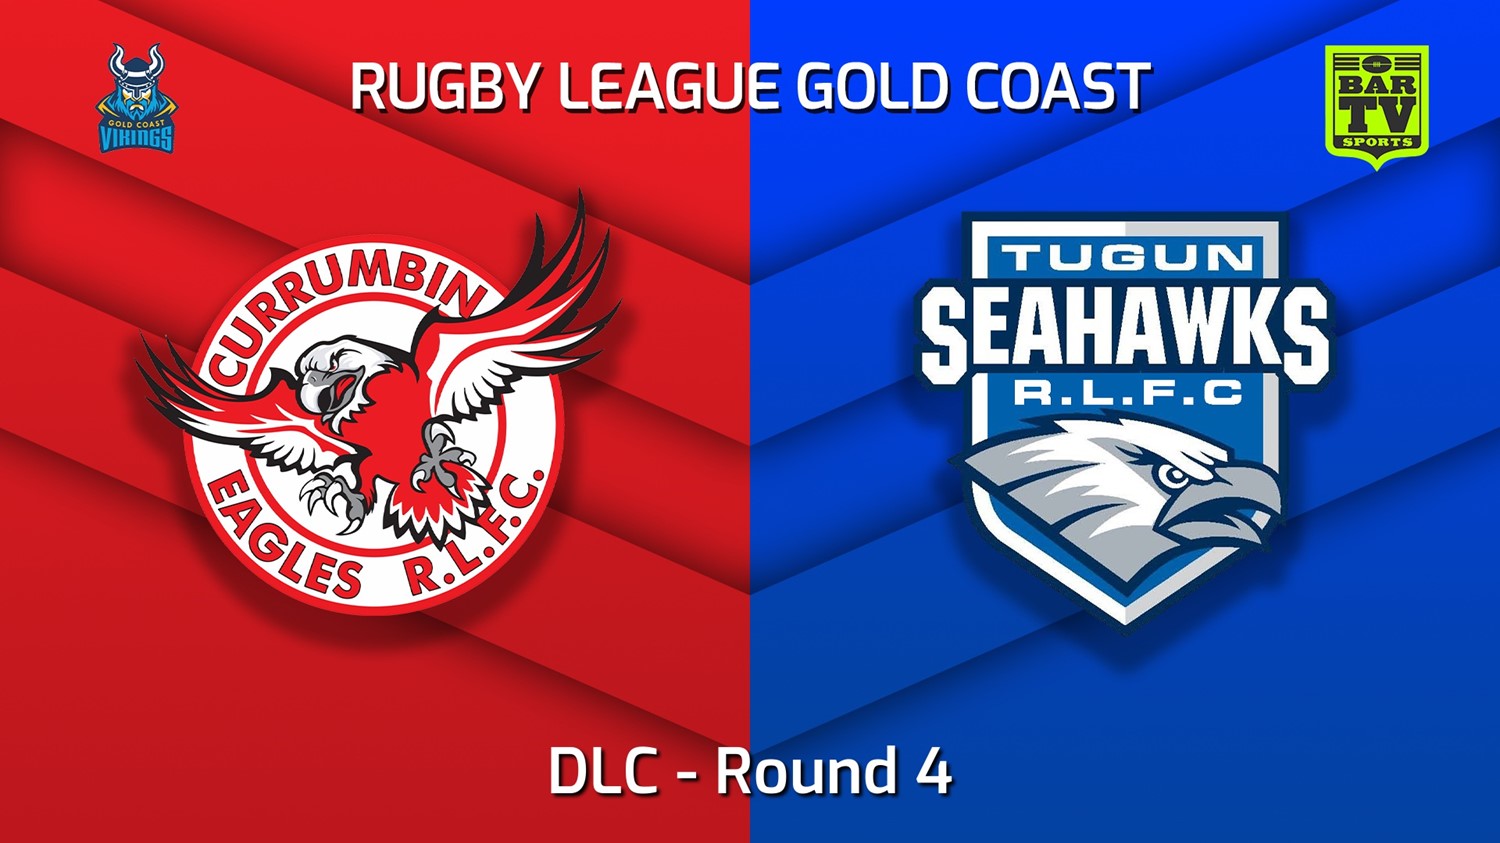 220424-Gold Coast Round 4 - DLC - Currumbin Eagles v Tugun Seahawks Slate Image